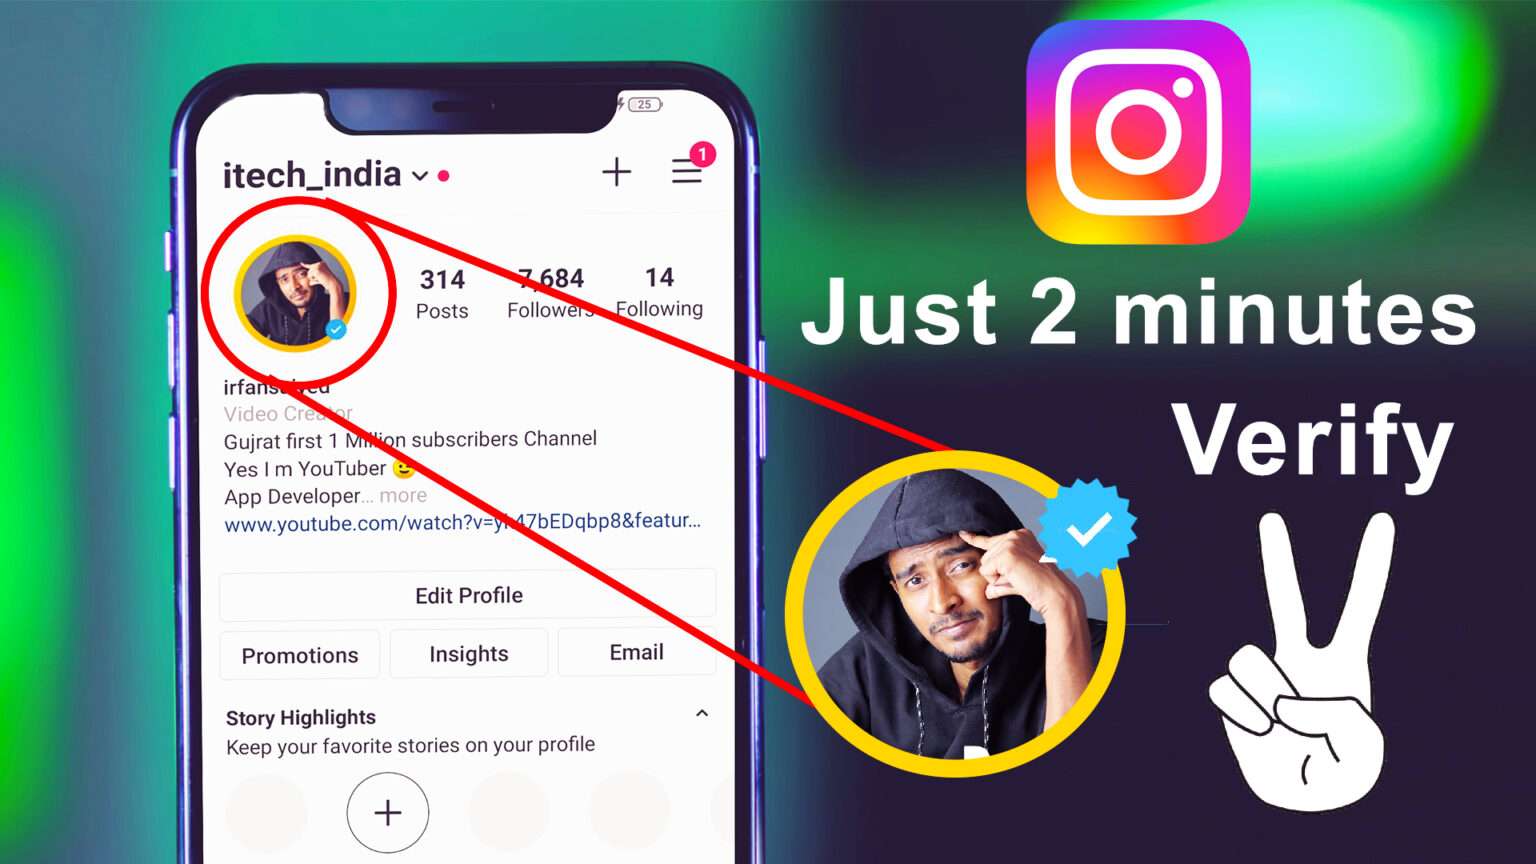 How do you get a blue tick on Instagram? iTech